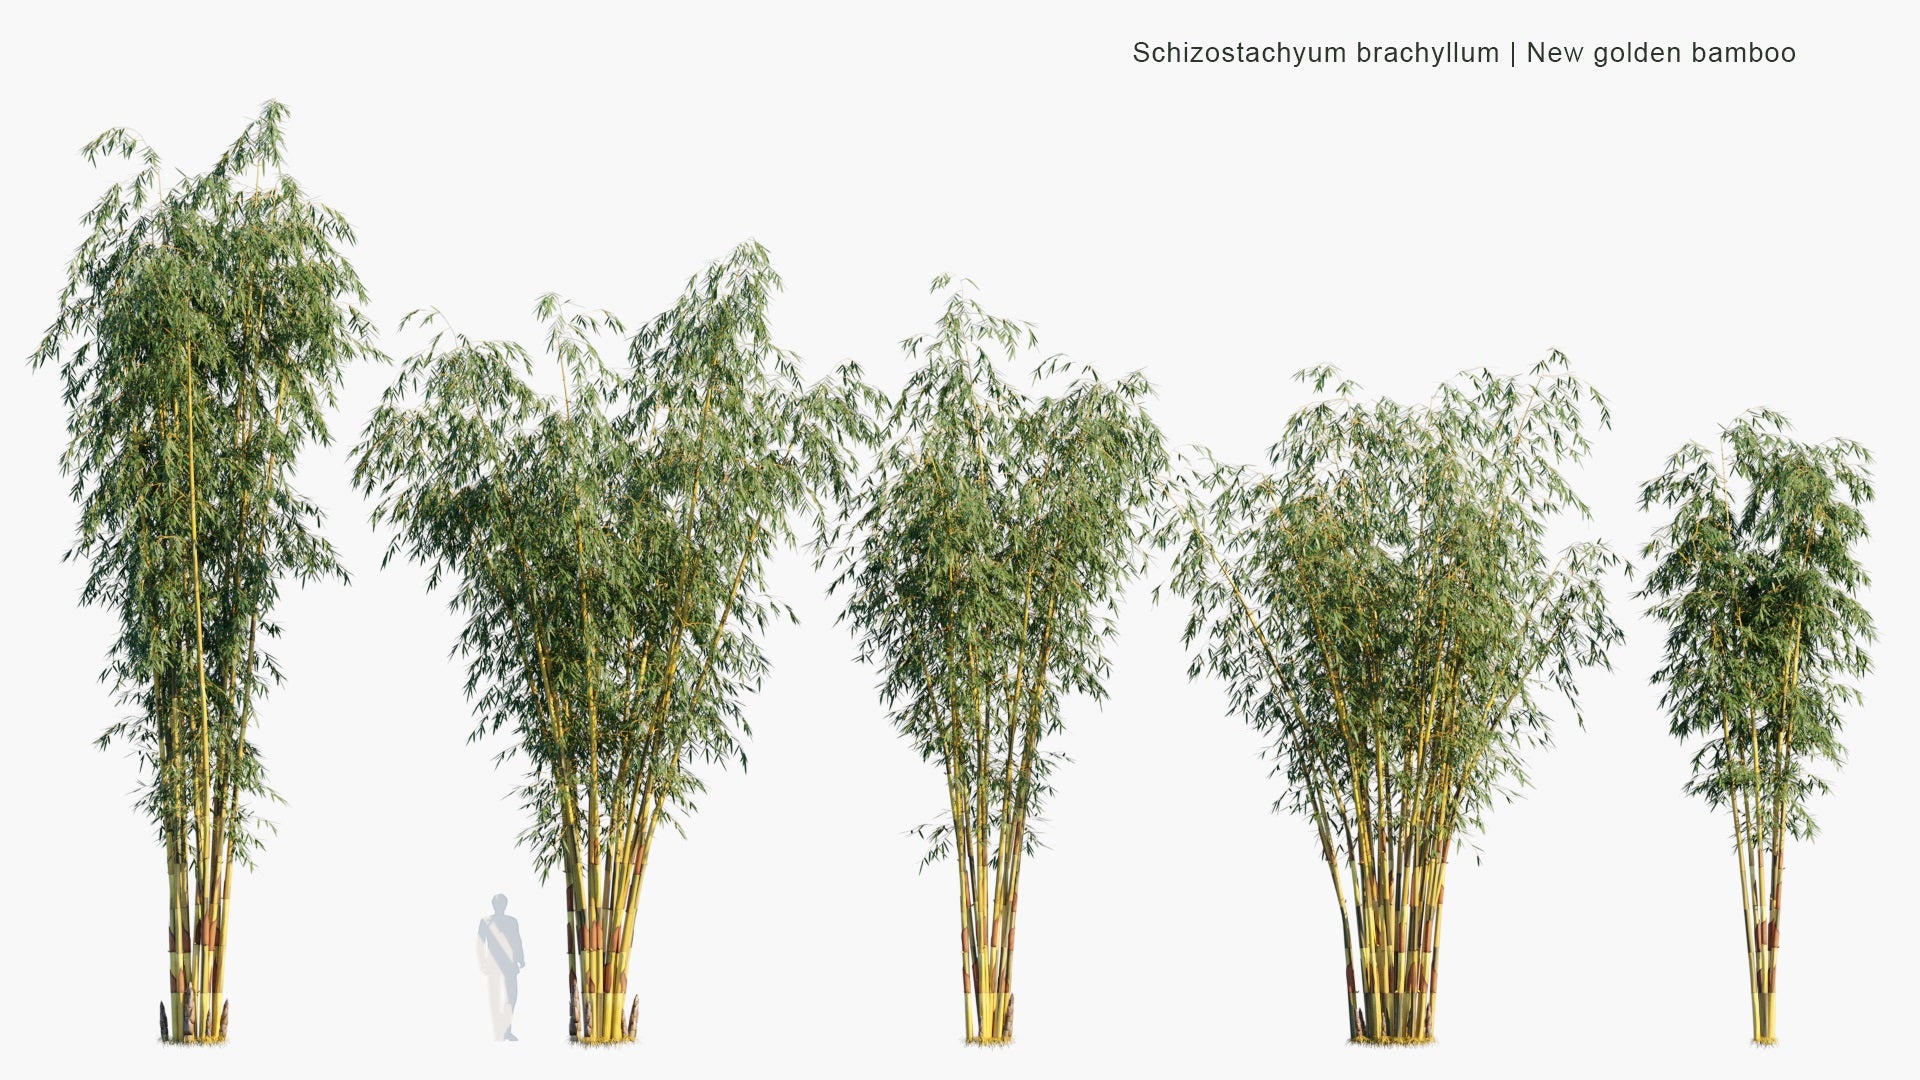 Low Poly Schizostachyum Brachyllum - New Golden Bamboo, Philippines Construction Bamboo, Pure Yellow Bamboo (3D Model)